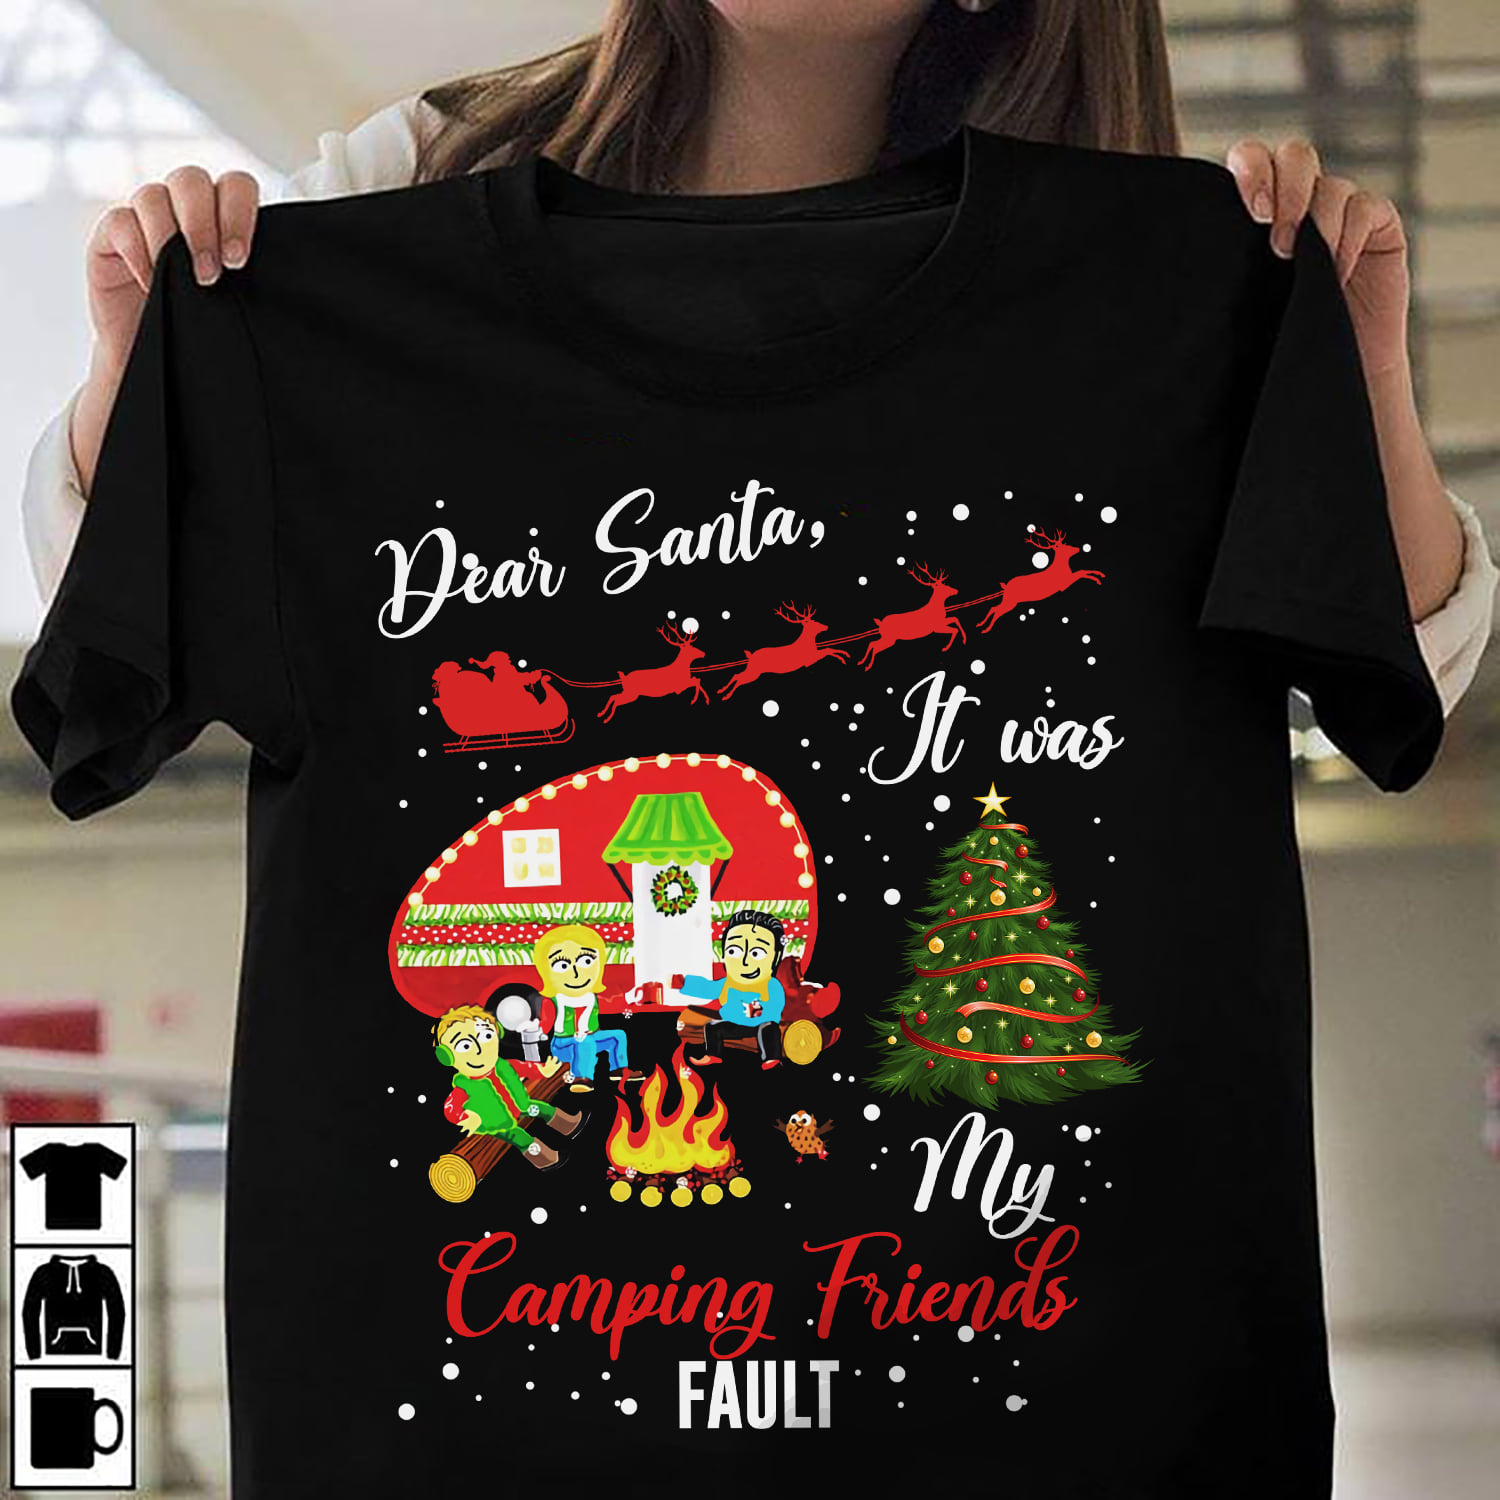 Dear Santa, It was my camping friends fault - Camping partner T-shirt, Santa Claus's sleigh